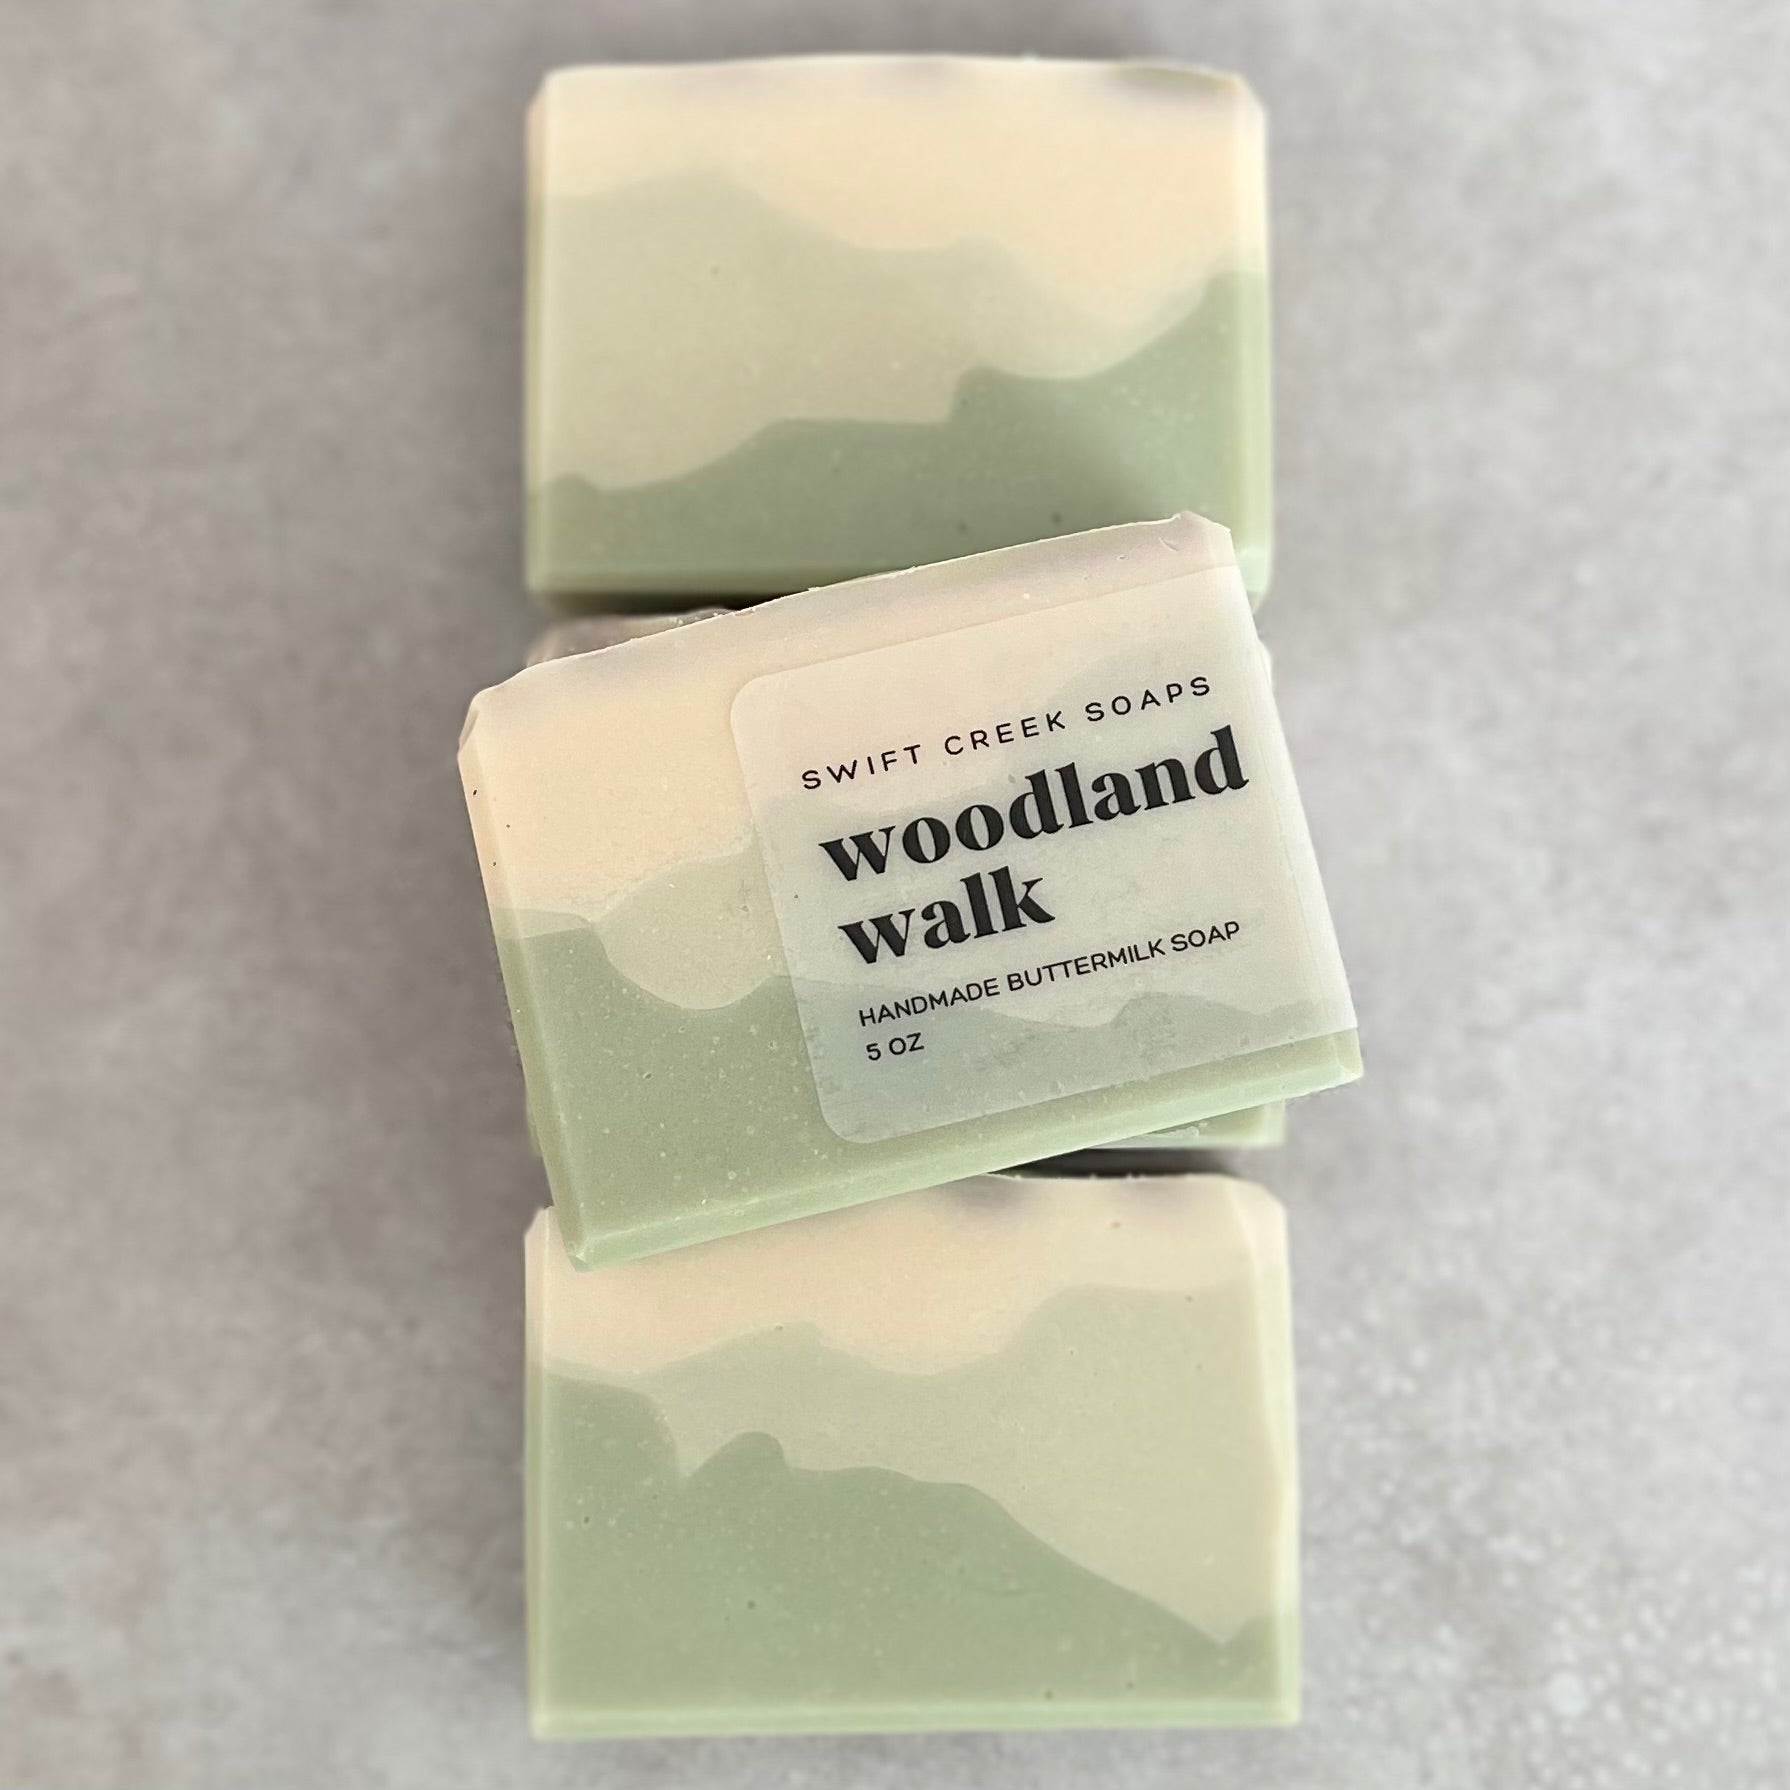 Woodland Walk soap